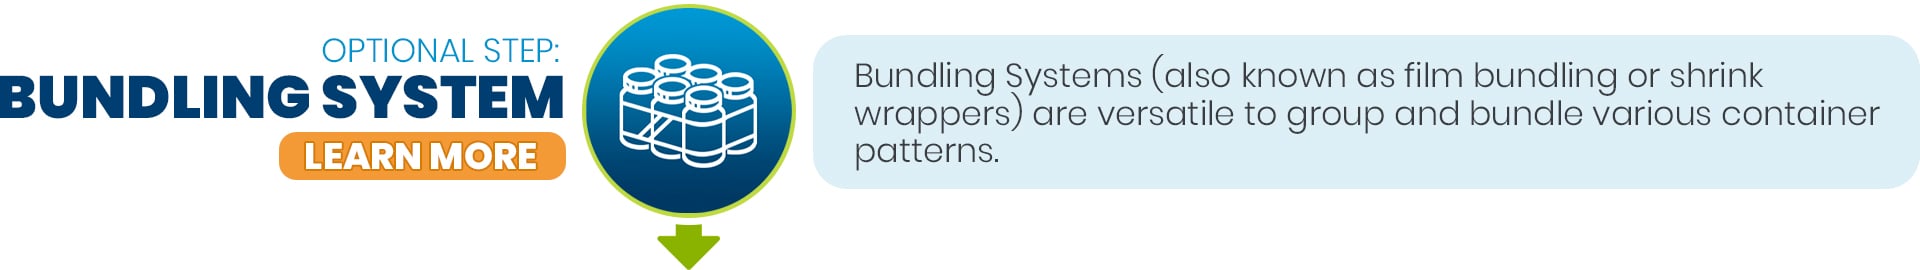 Bundling System - Block